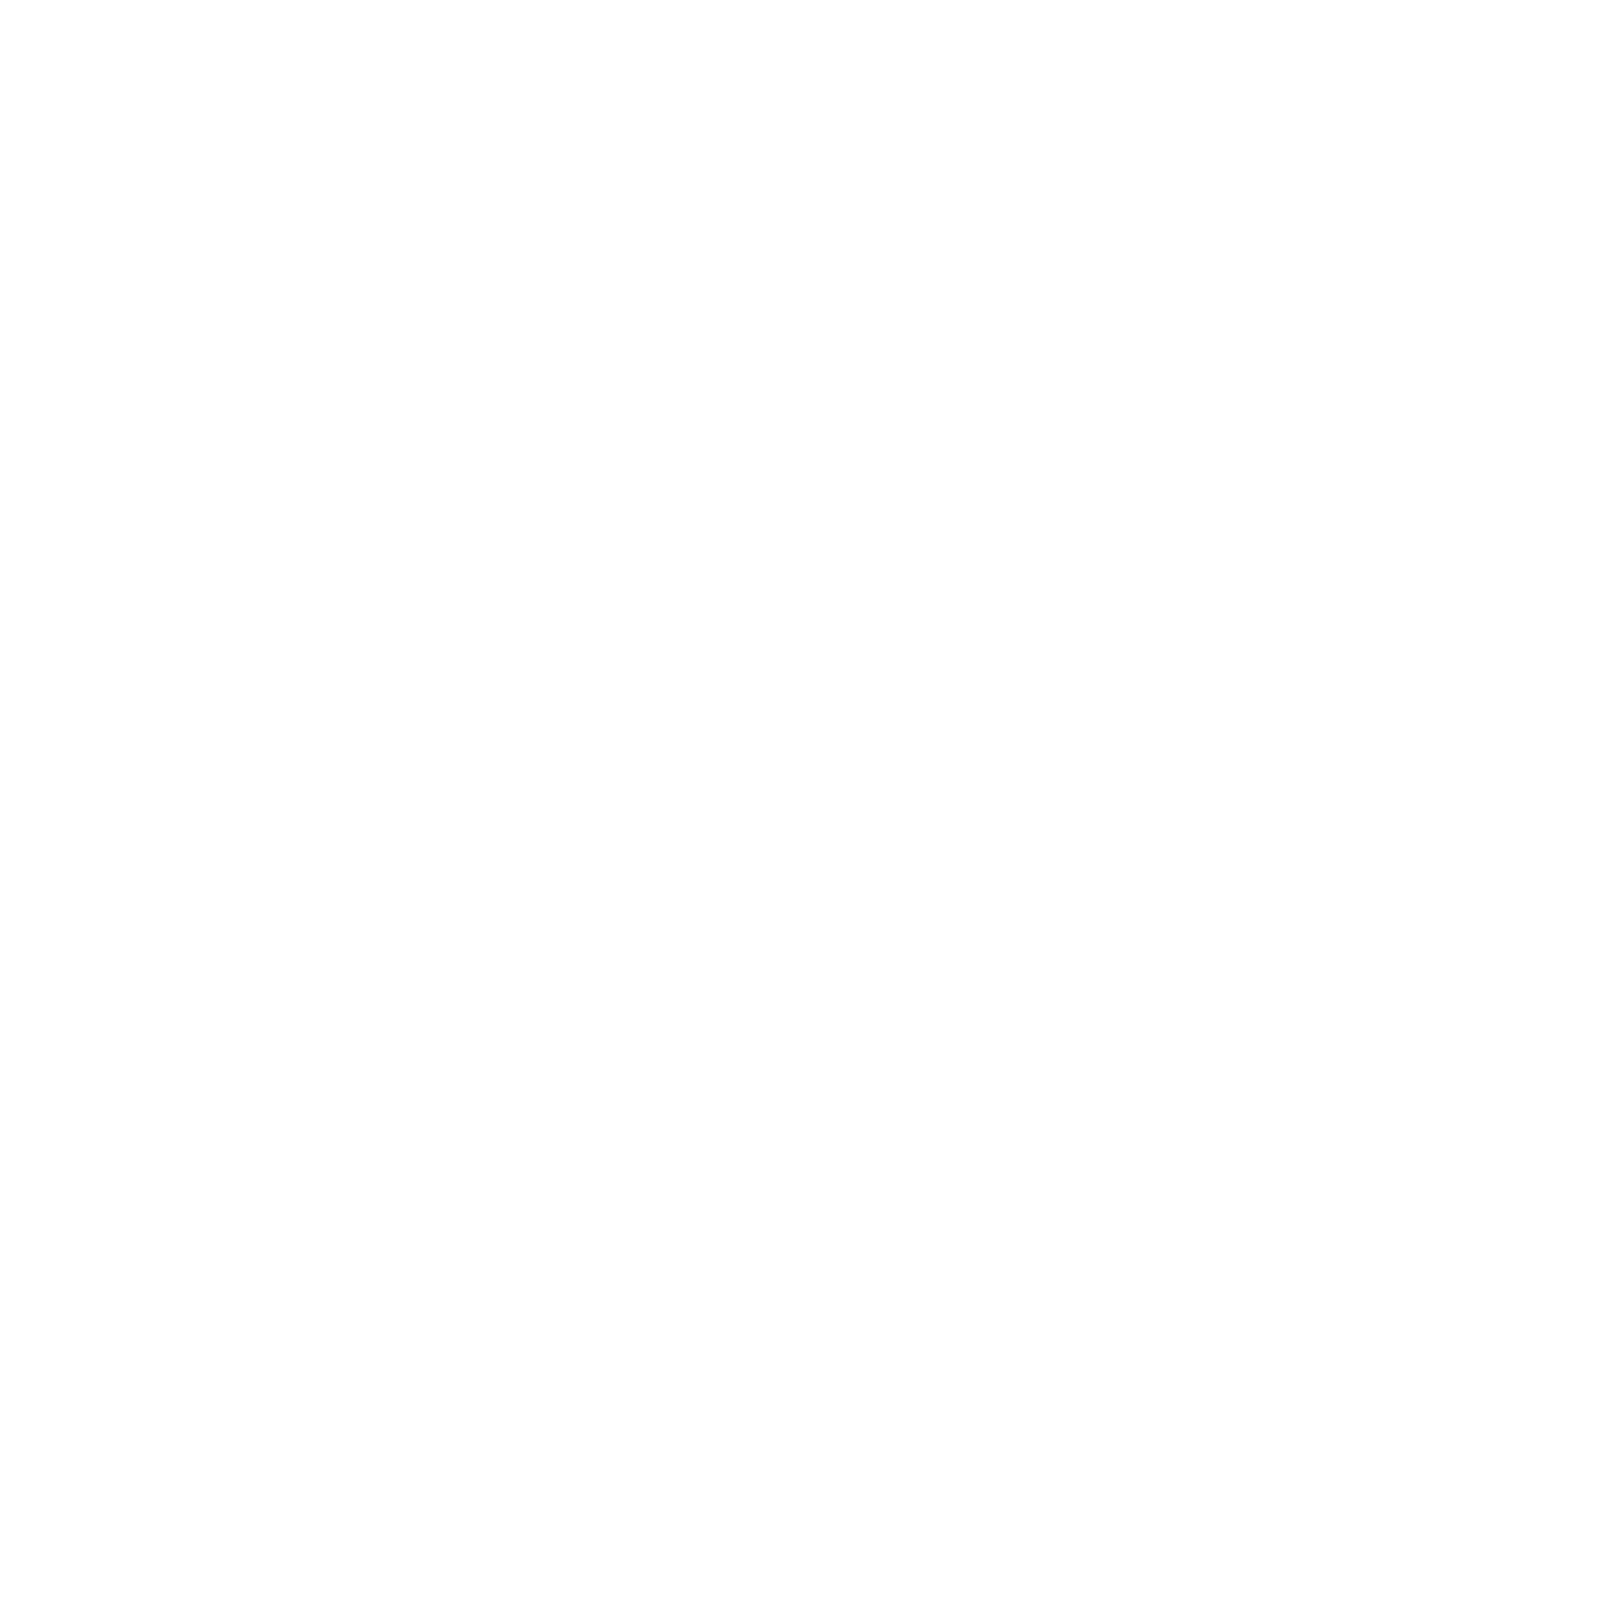 Landmark - Branding - Logotype - Peek Creative Ltd_Black and White - Square - Portfolio